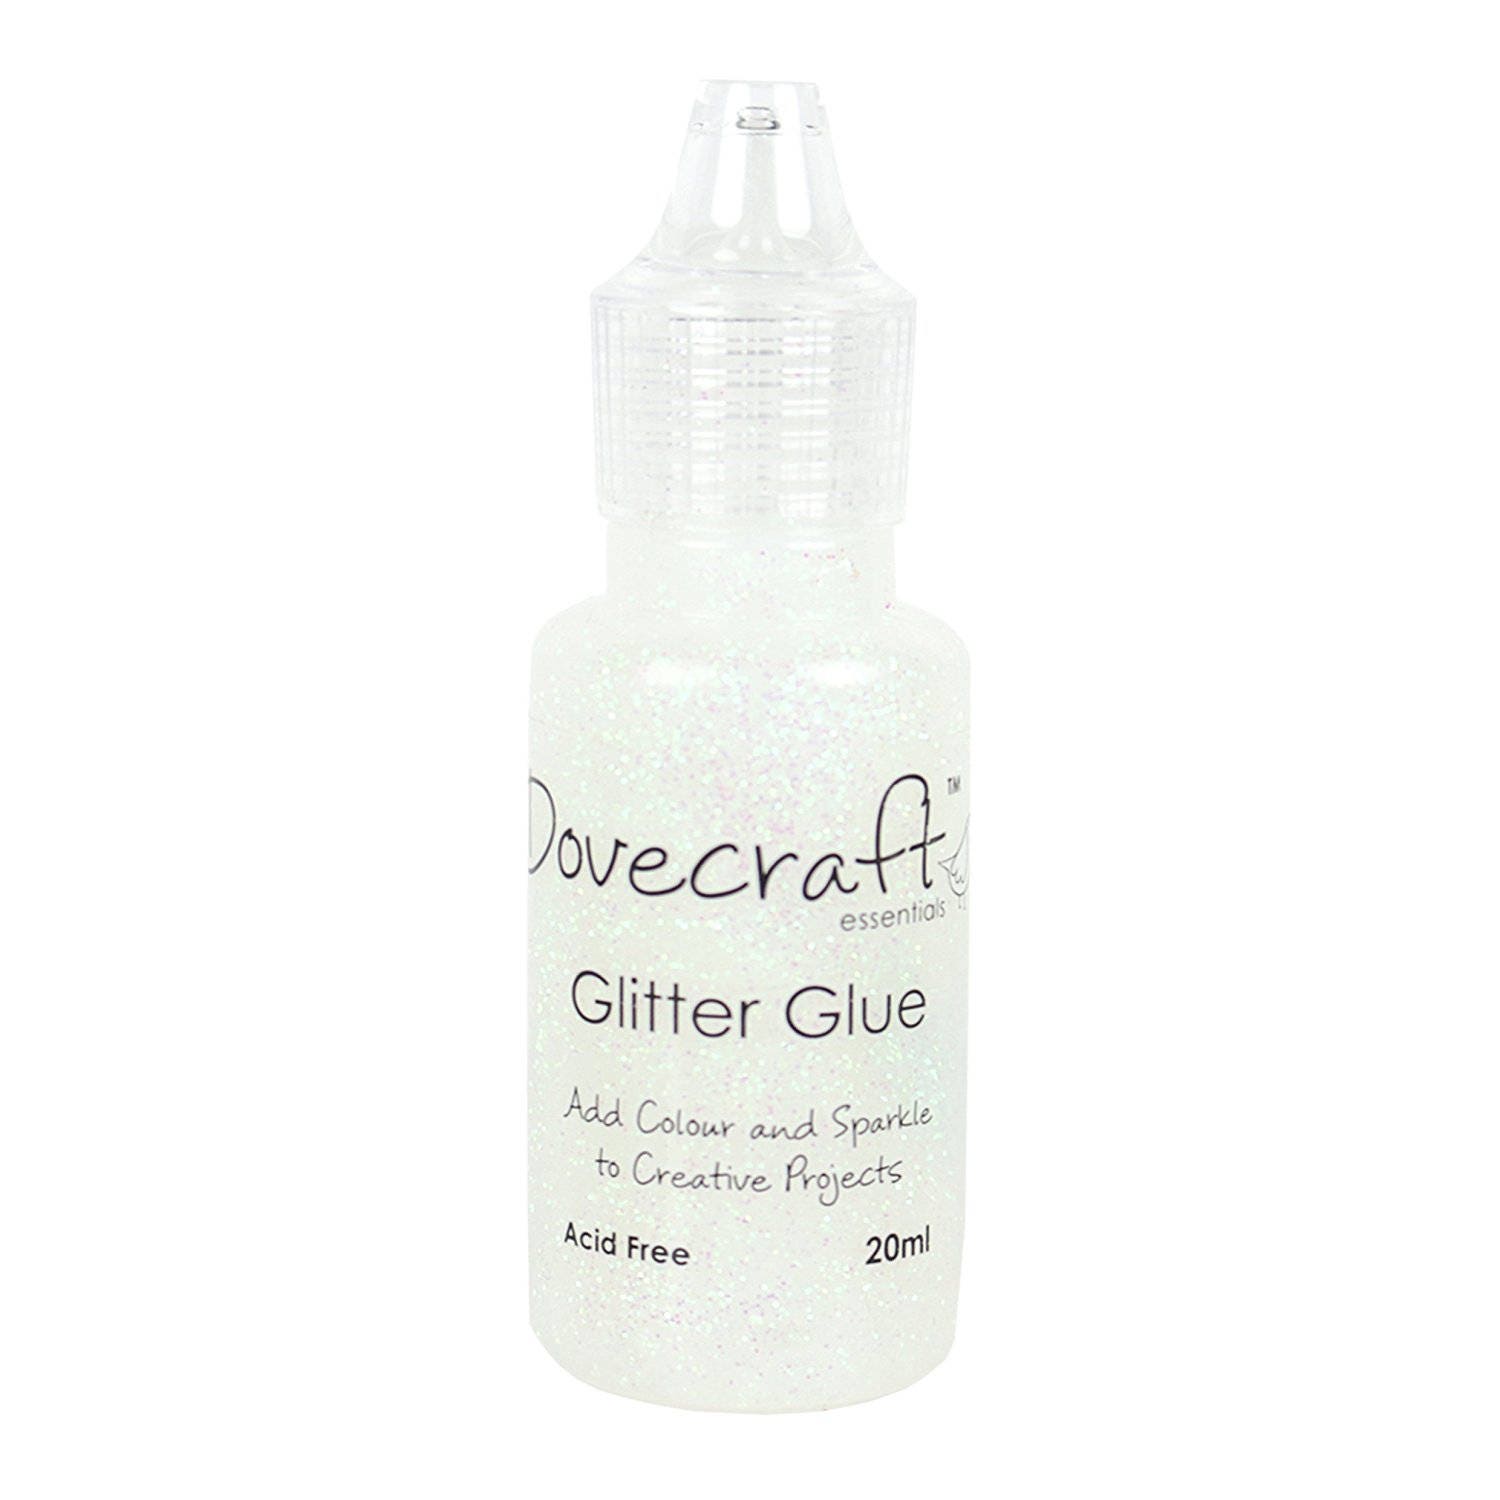 Glitter Glue Crystal Iridescent White Dovecraft 1 x 20ml | Etsy